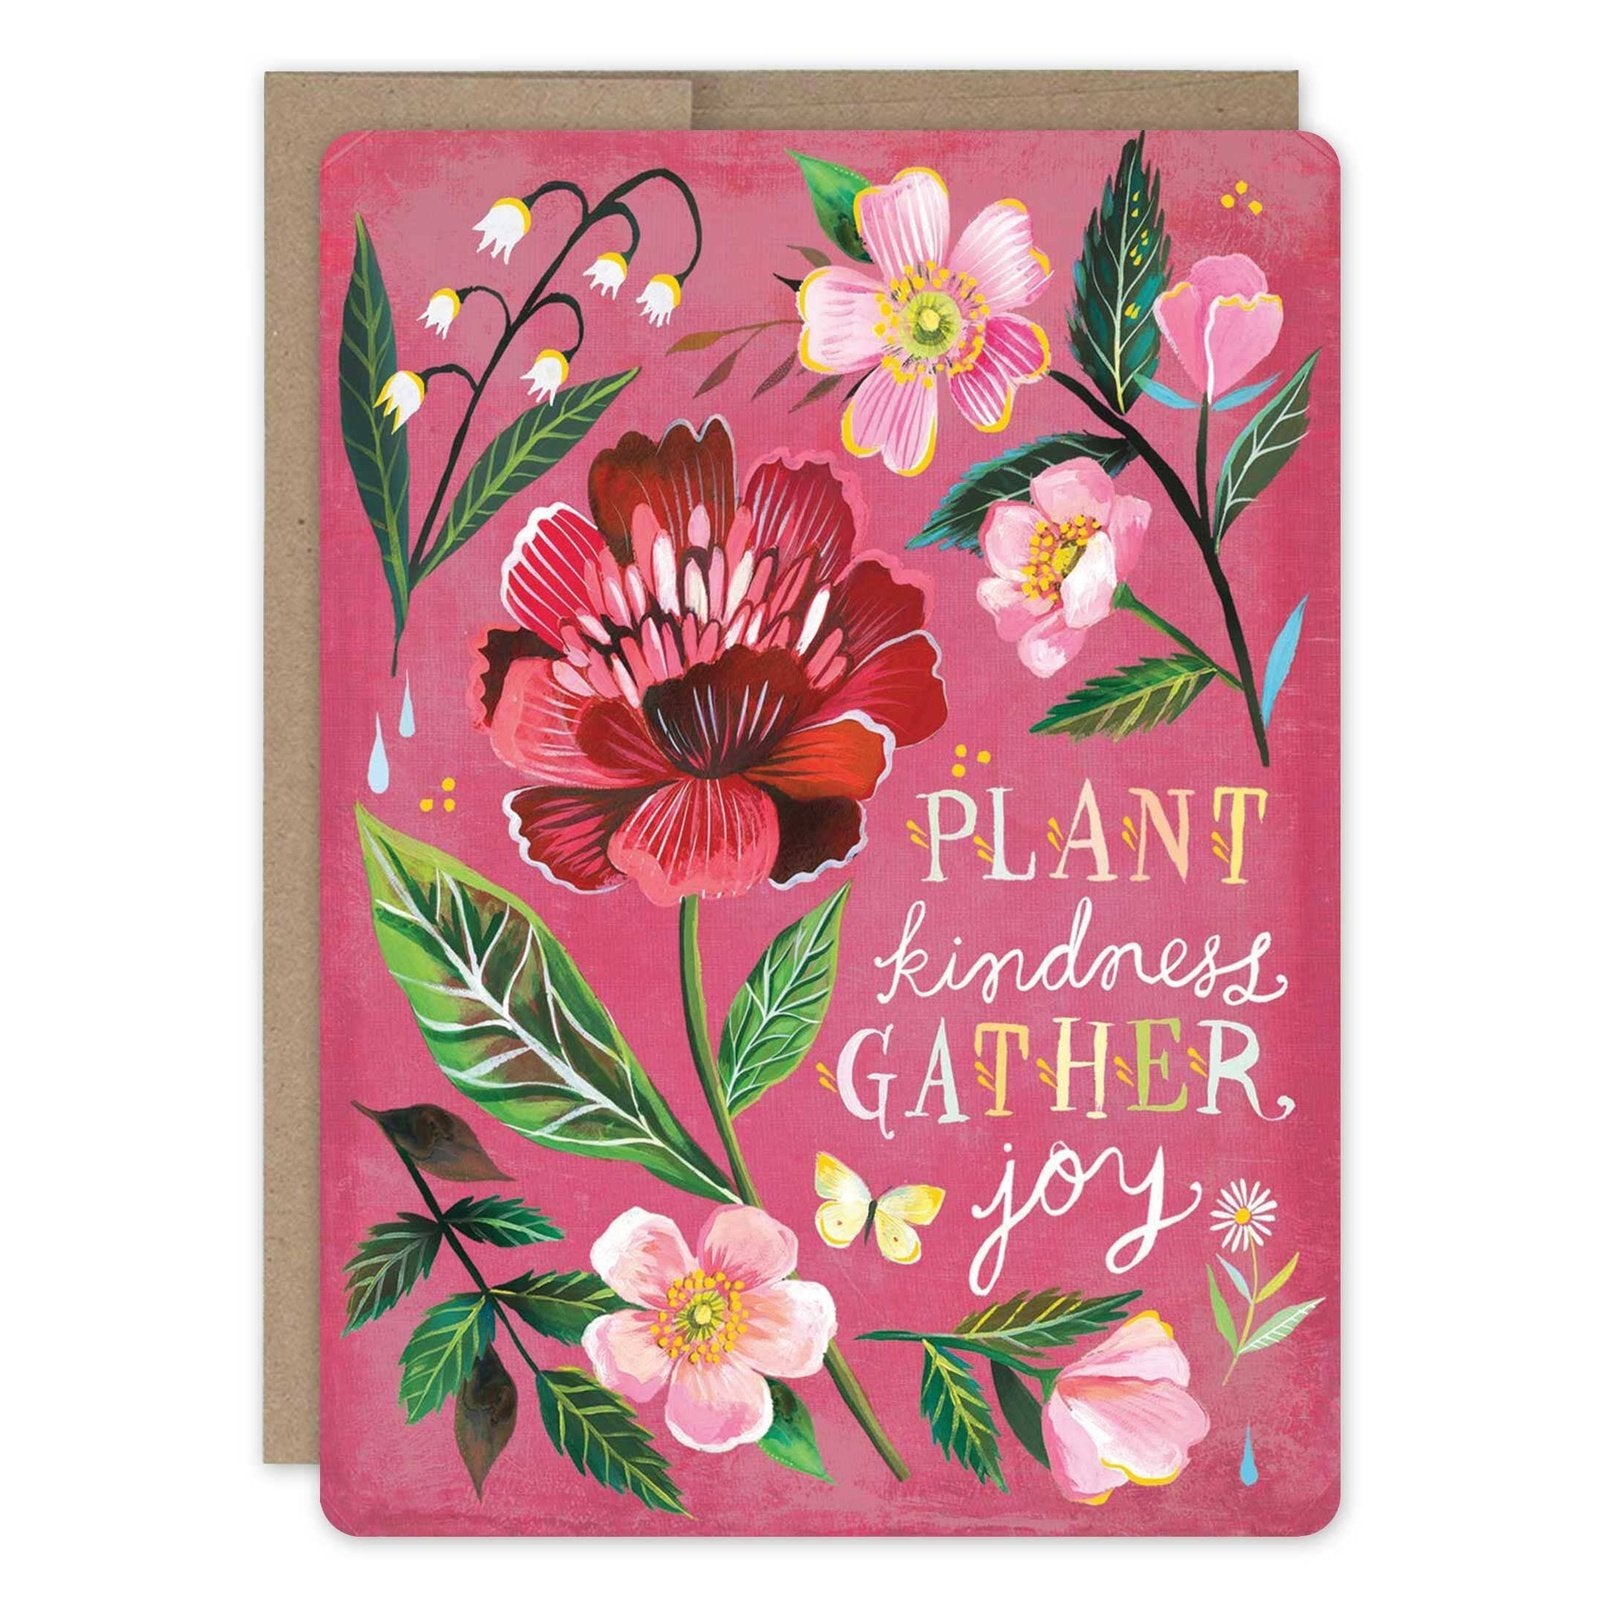 Biely & Shoaf Plant Kindness Birthday Card